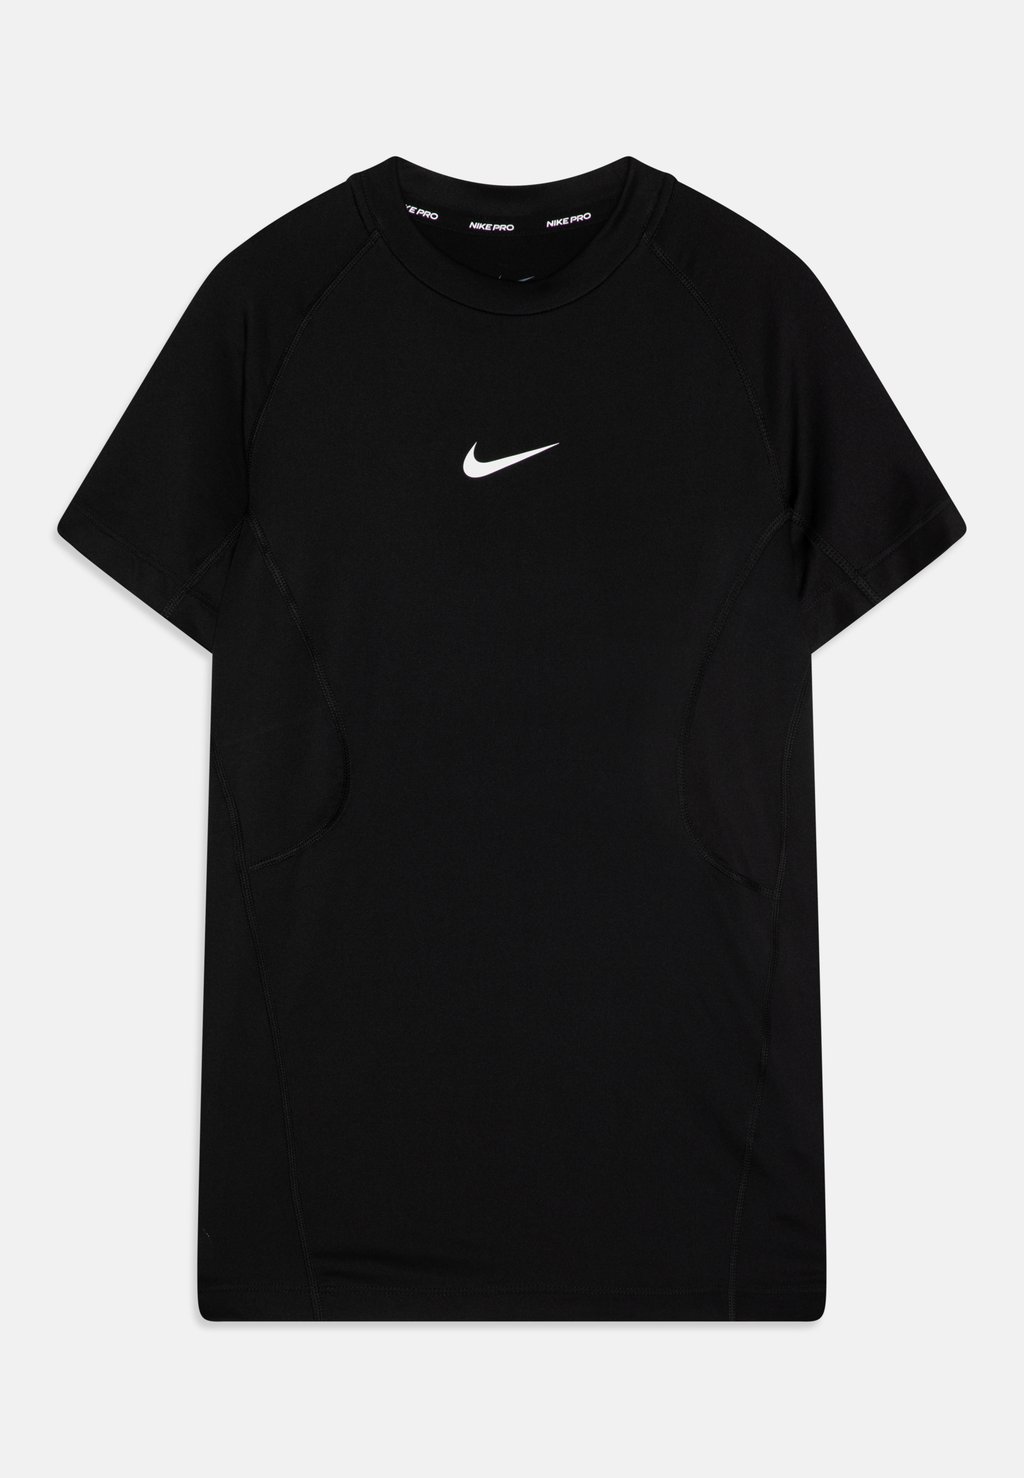 Спортивная футболка Df Unisex Nike, цвет black/white спортивная футболка ct df vctry nike цвет soft yellow topaz gold black